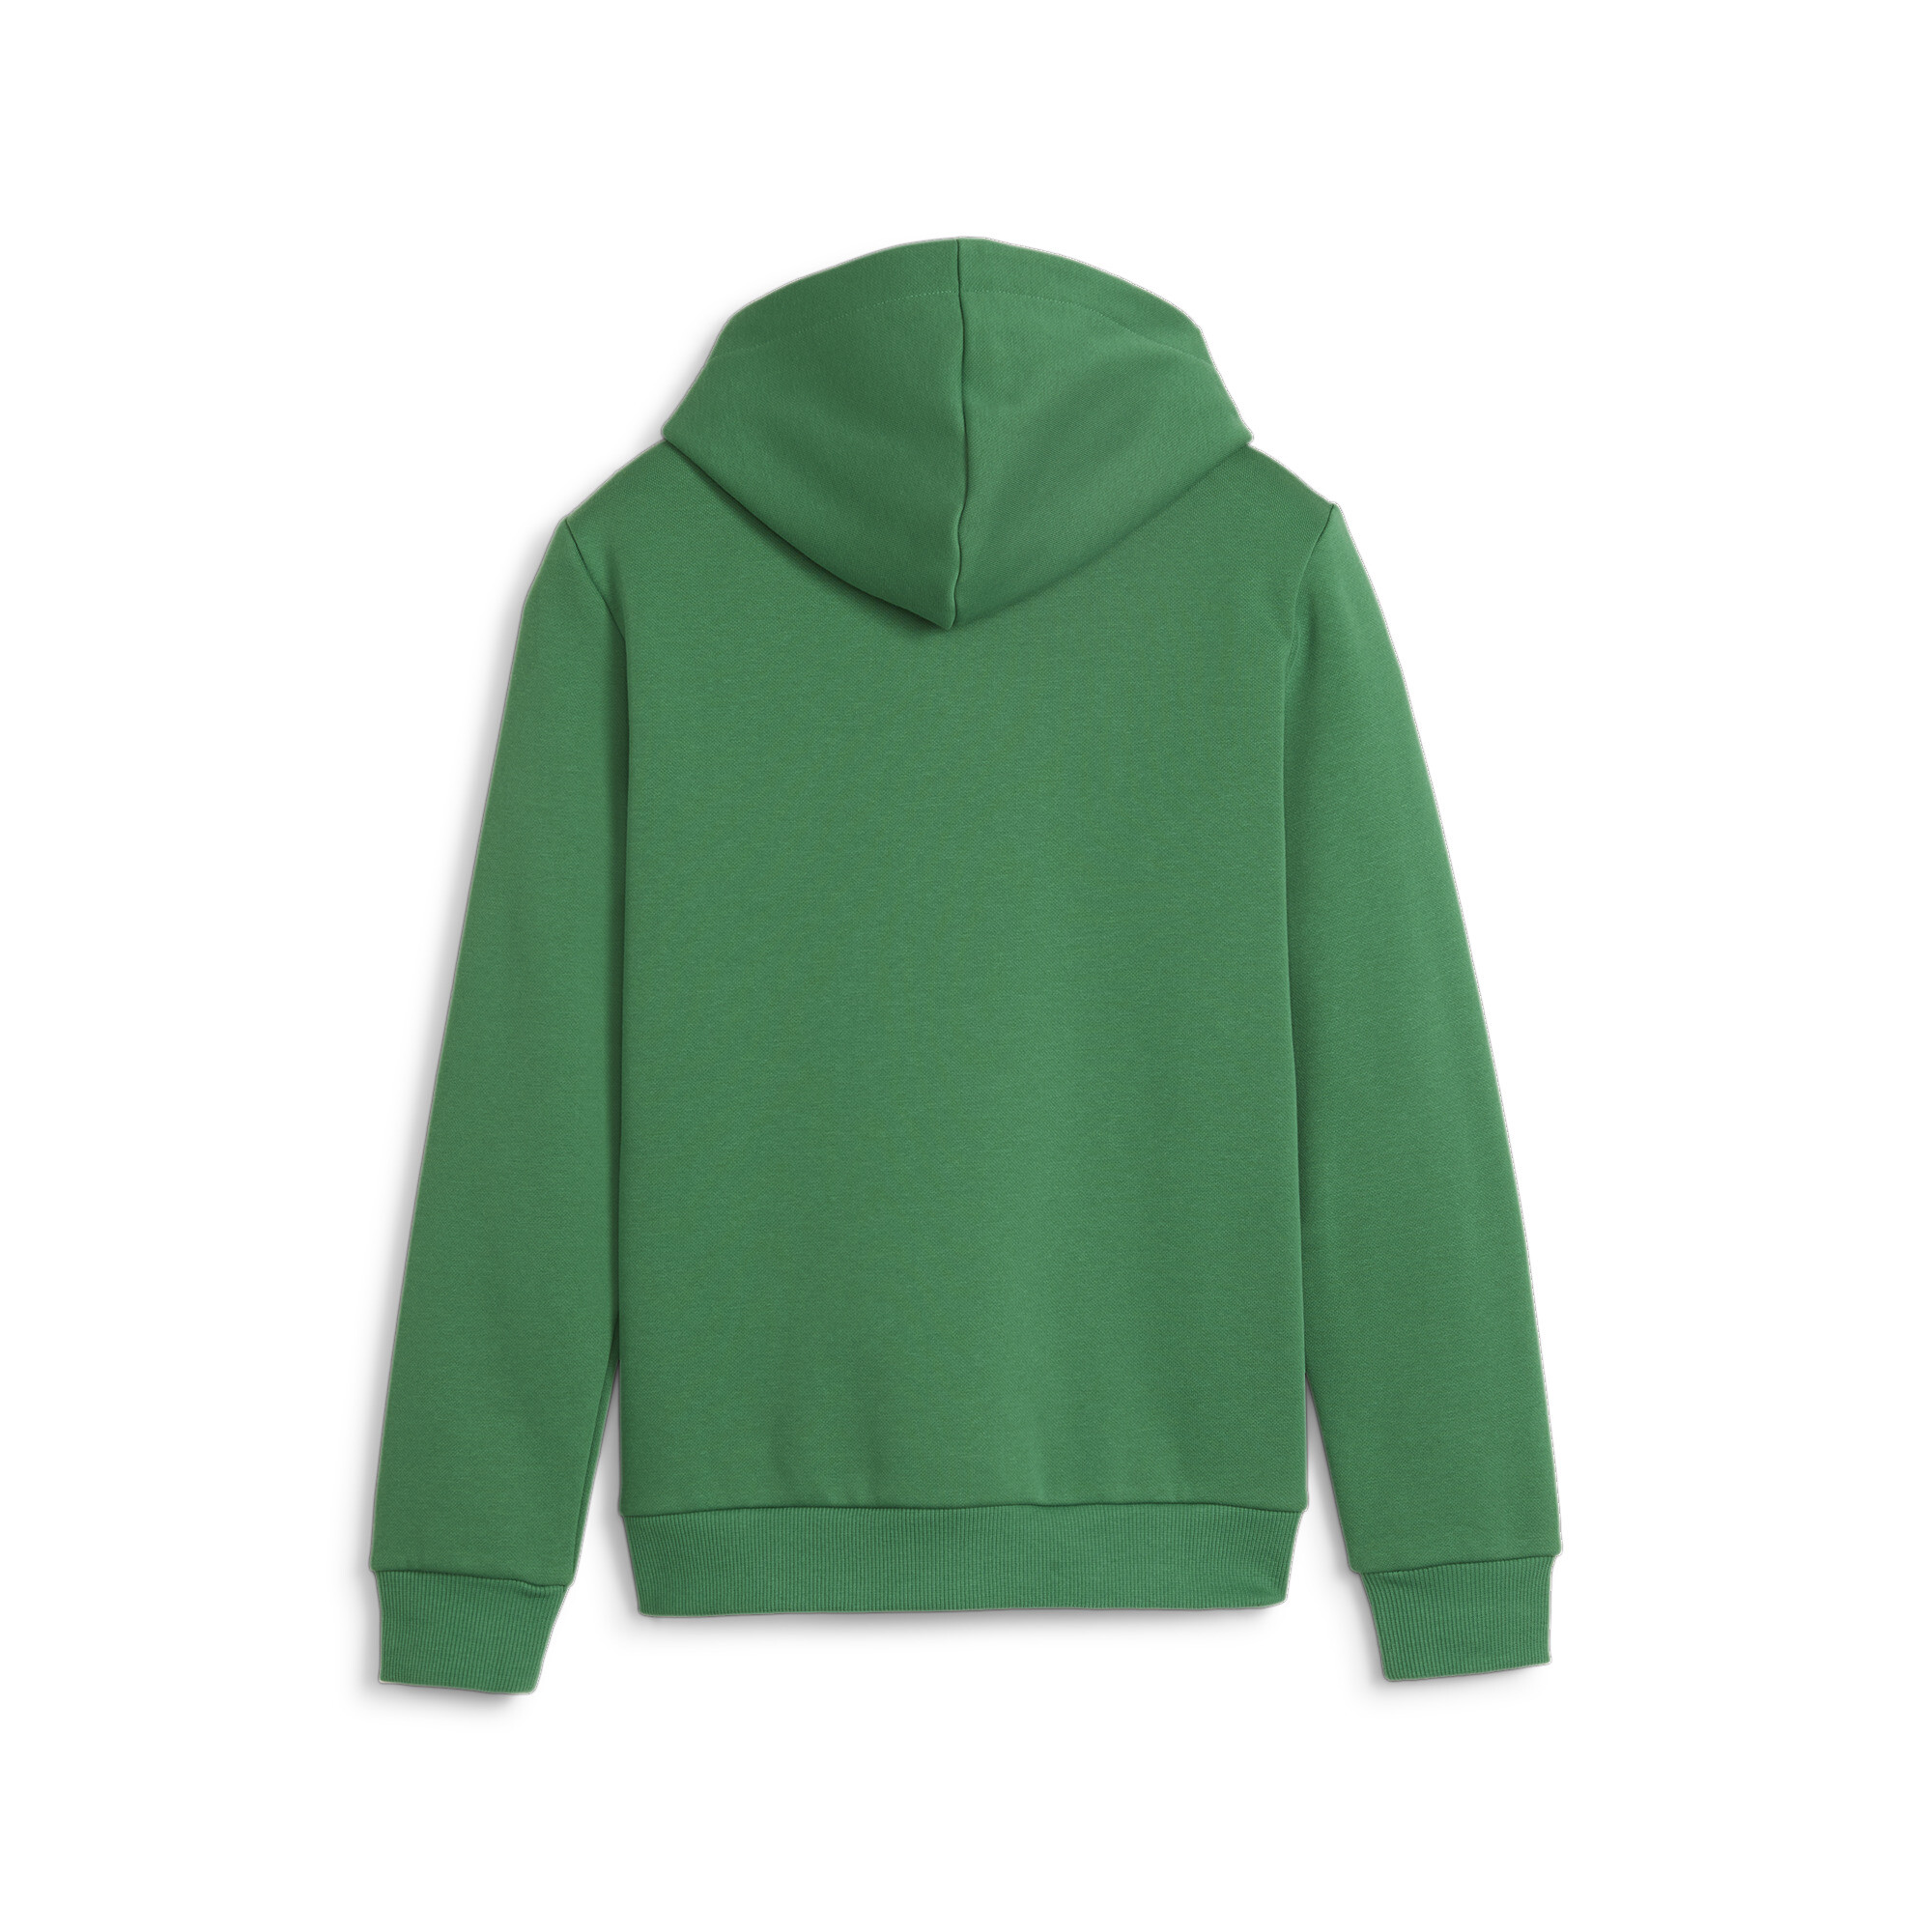 PUMA Essentials+ Two-Tone Big Logo Hoodie In Green, Size 7-8 Youth